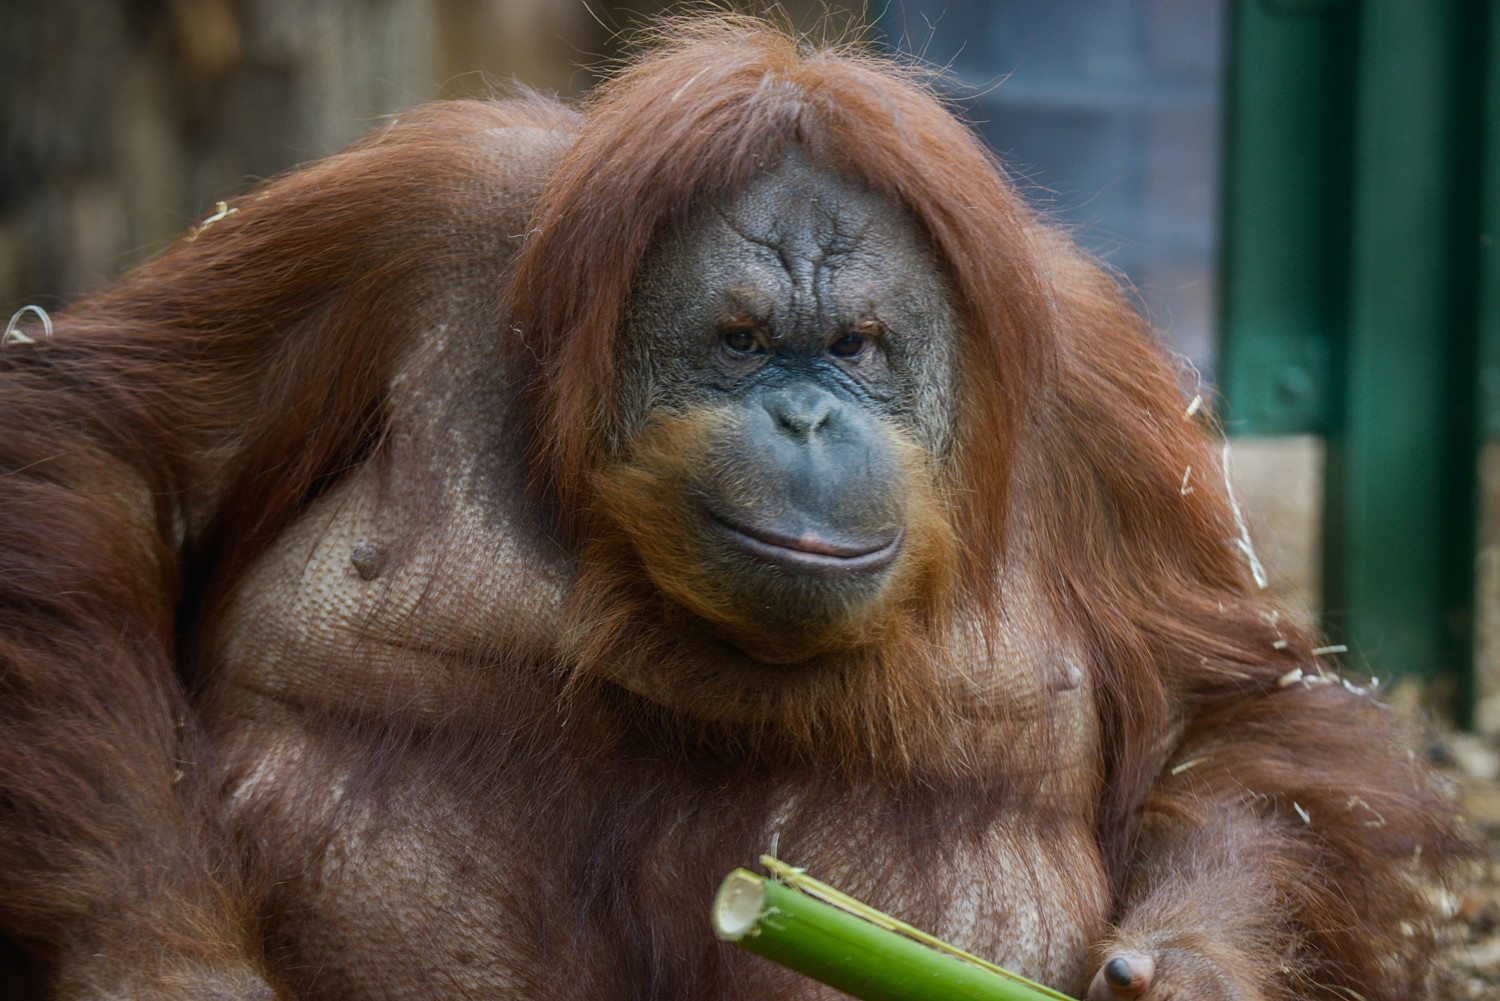 Rome Bioparco Opens A New Area For Orangutans